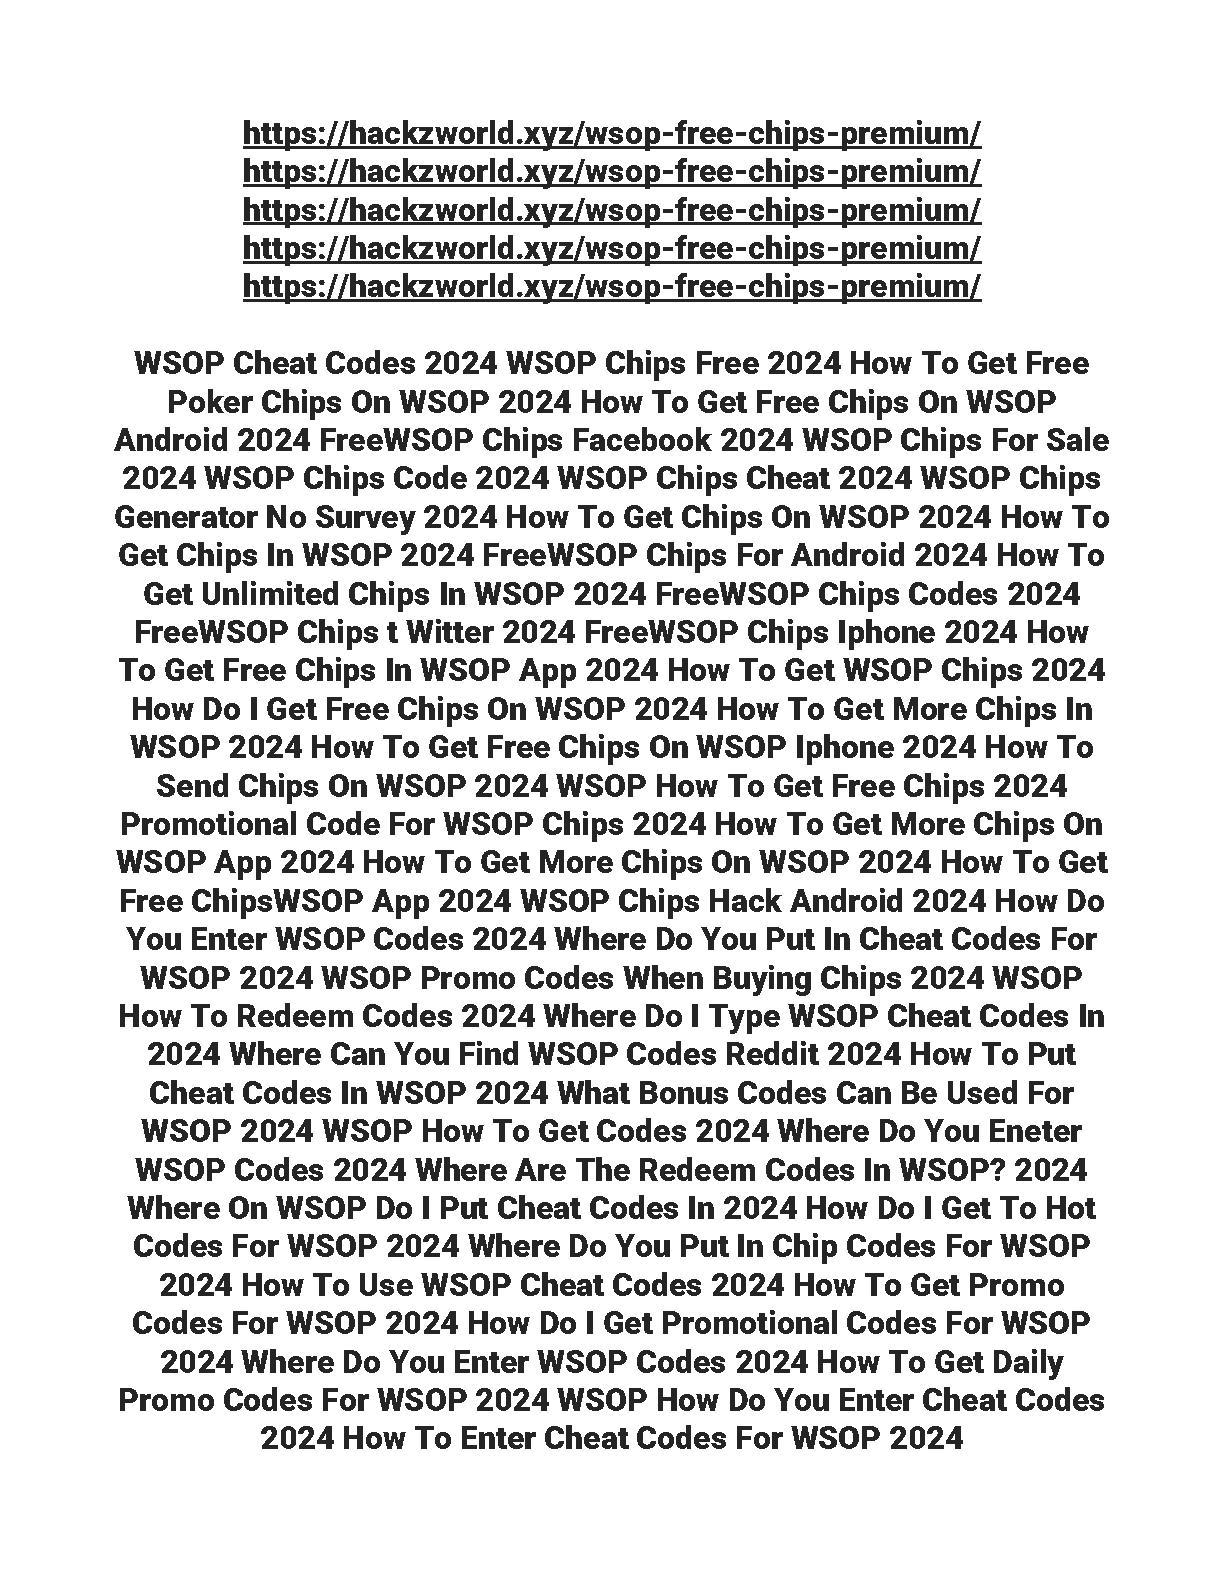 WSOP Cheat Codes 2024.pdf PDF Host